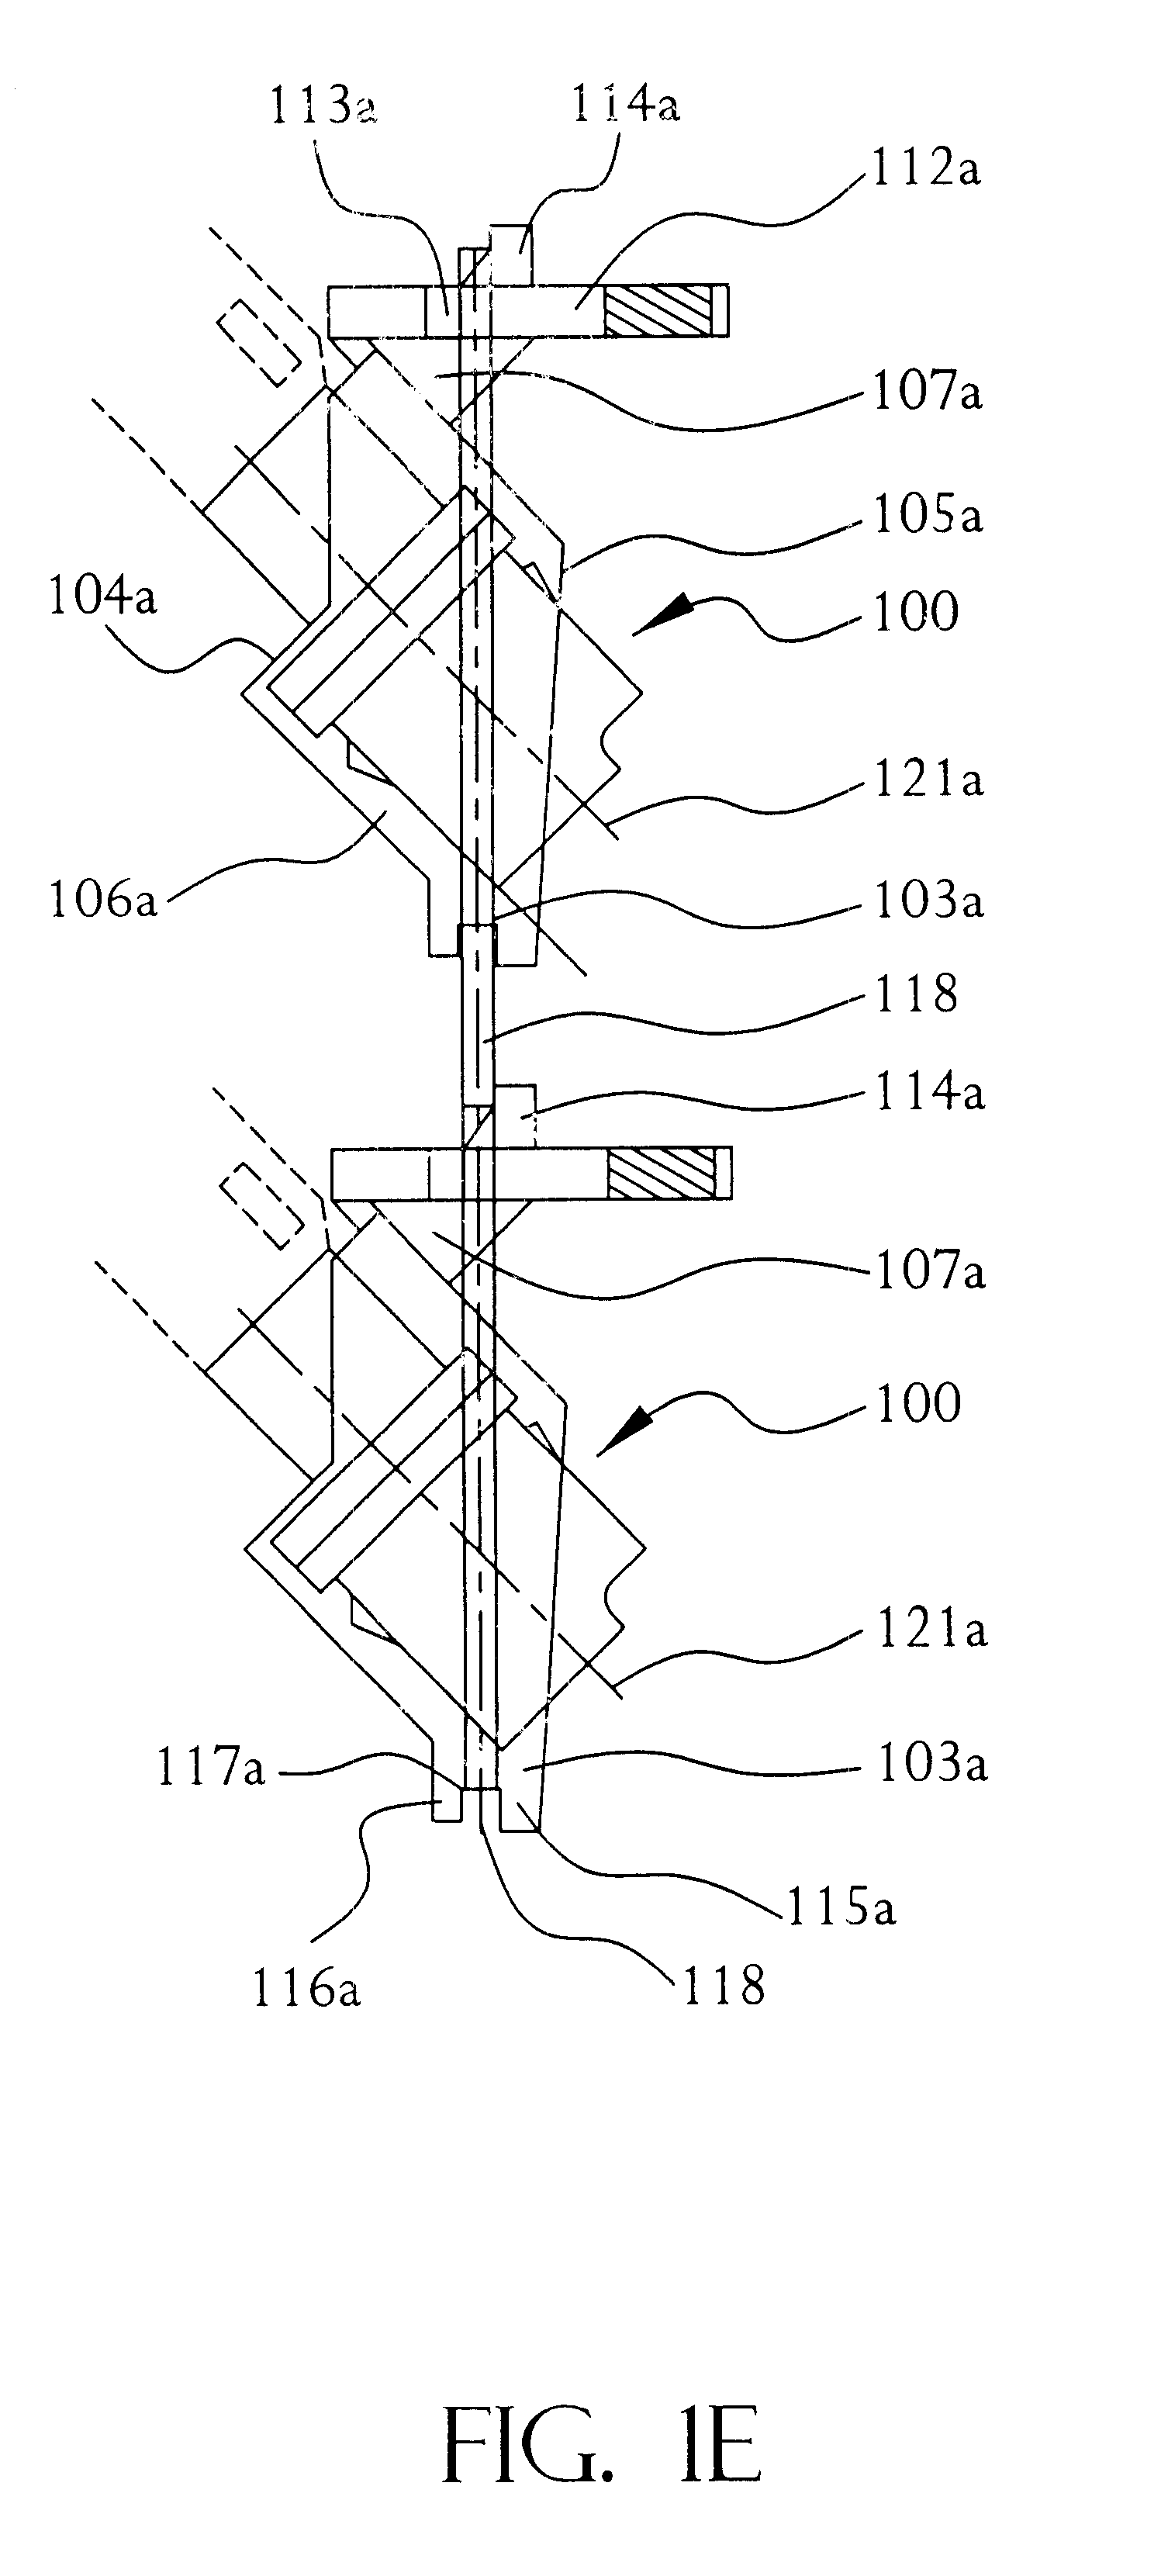 Angular mounted optical connector adaptor frame